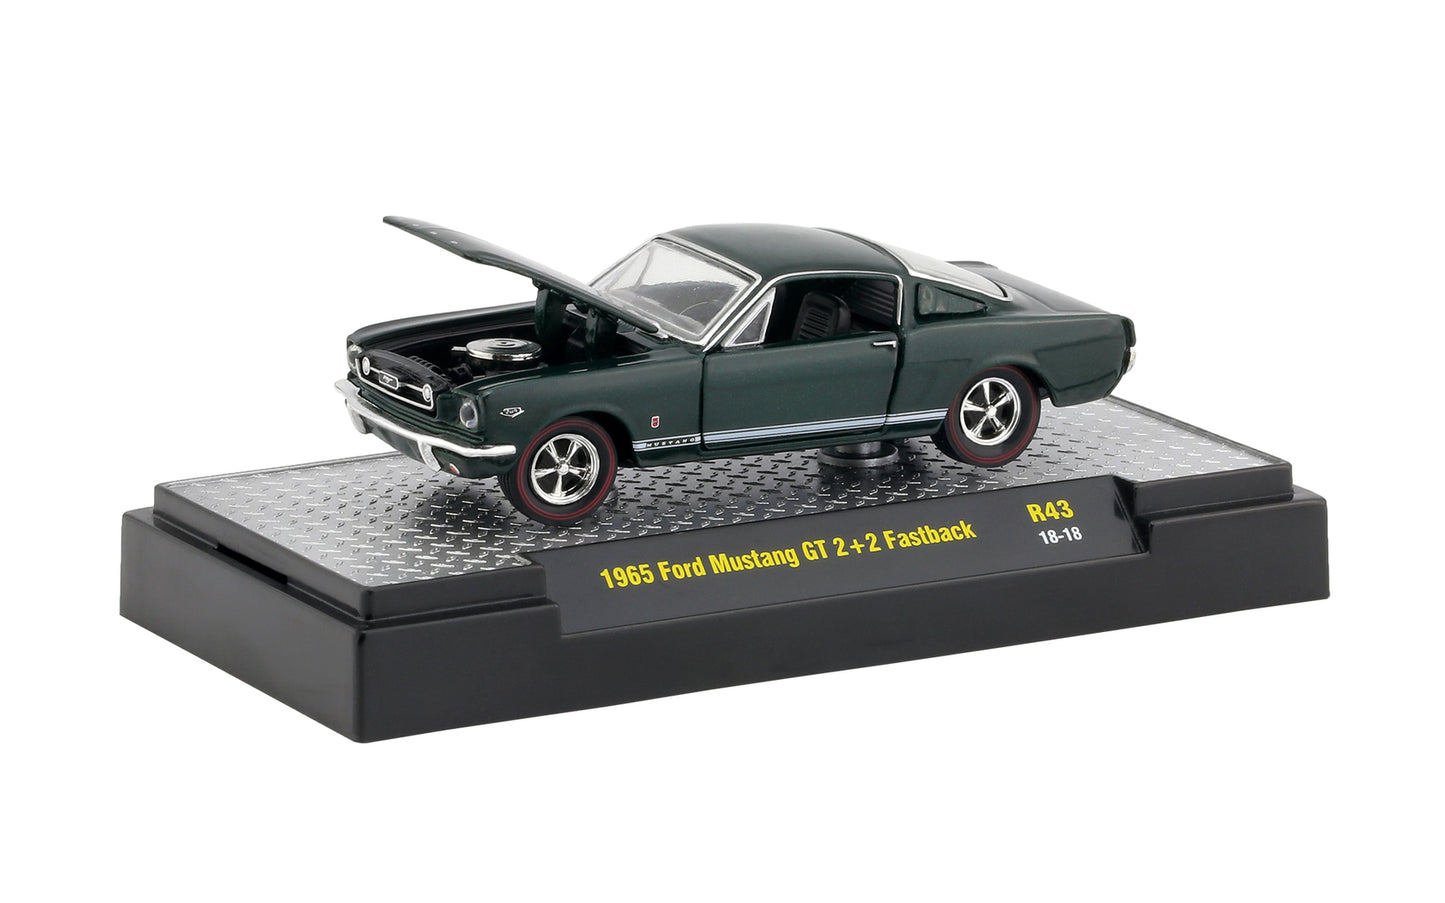 Release 43 - 1965 Ford Mustang GT 2+2 Fastback Die Cast Model